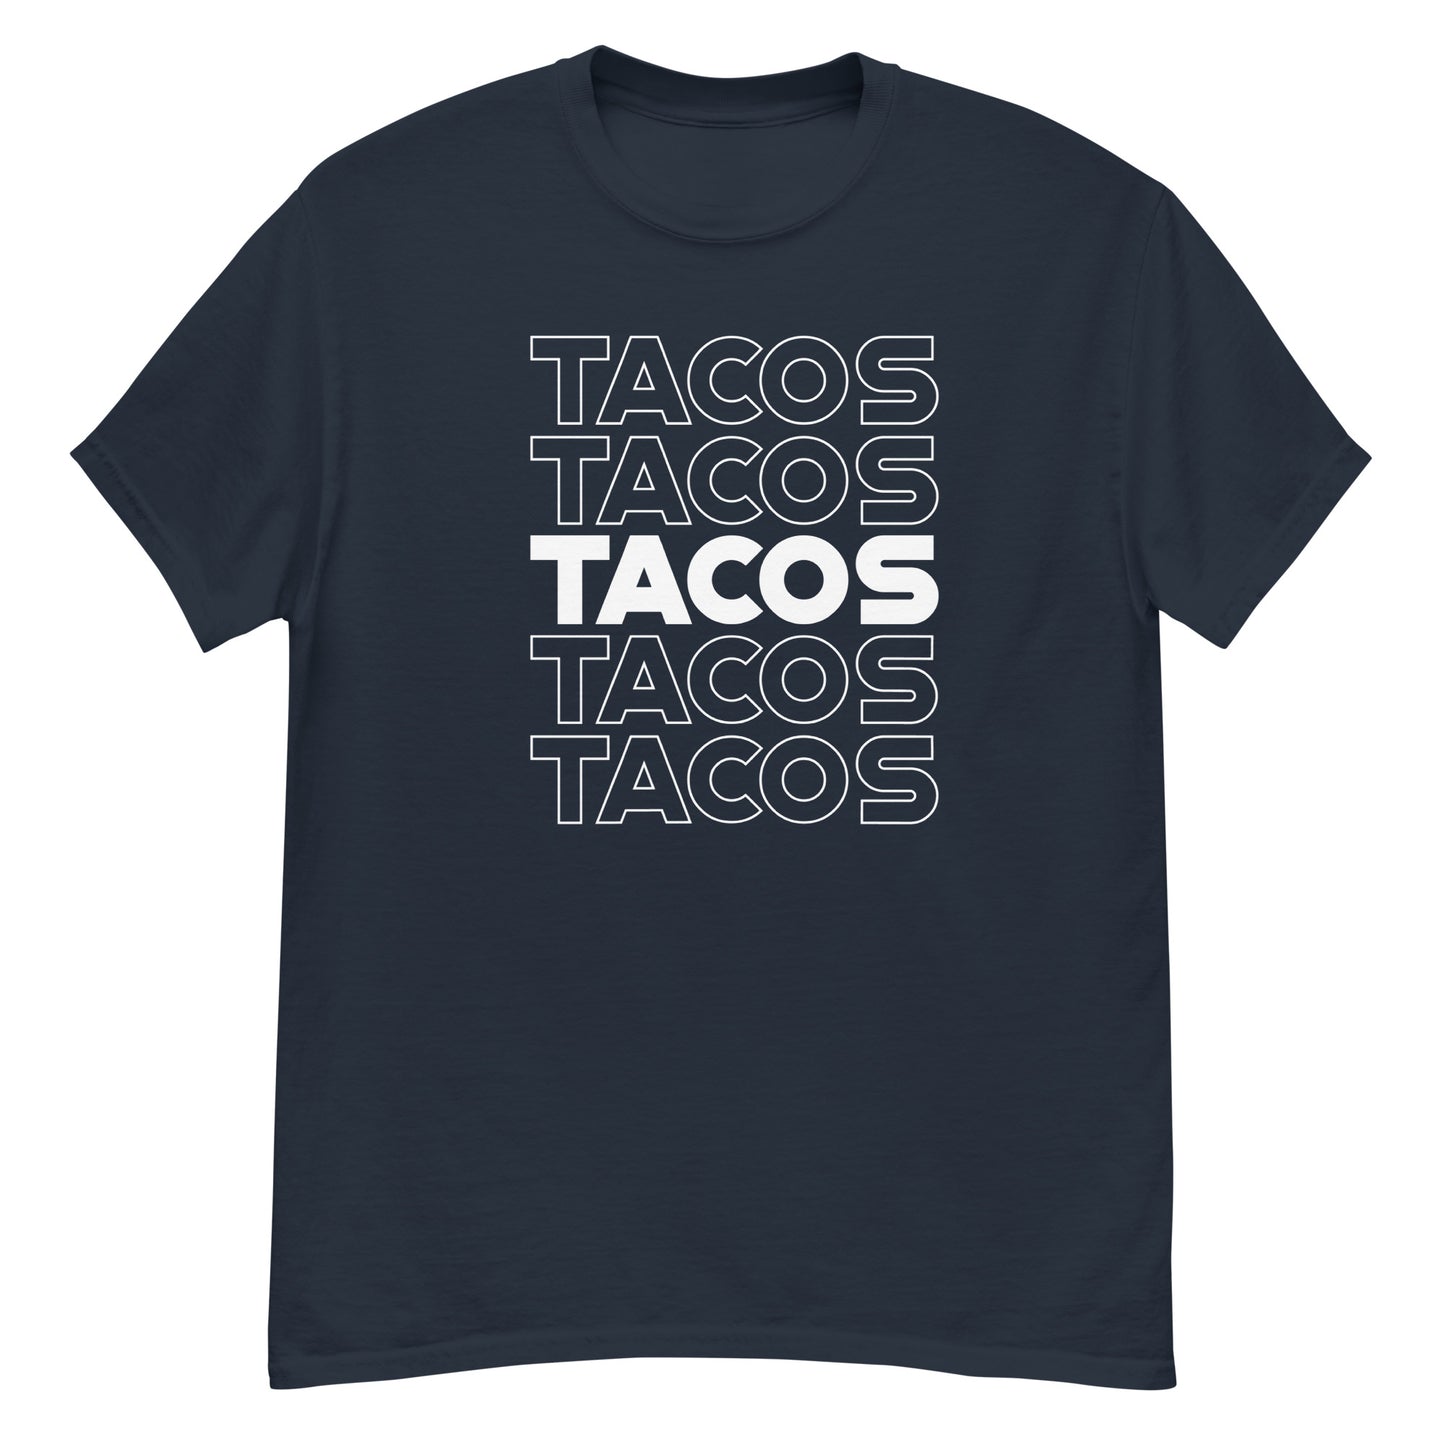 Tacos classic tee